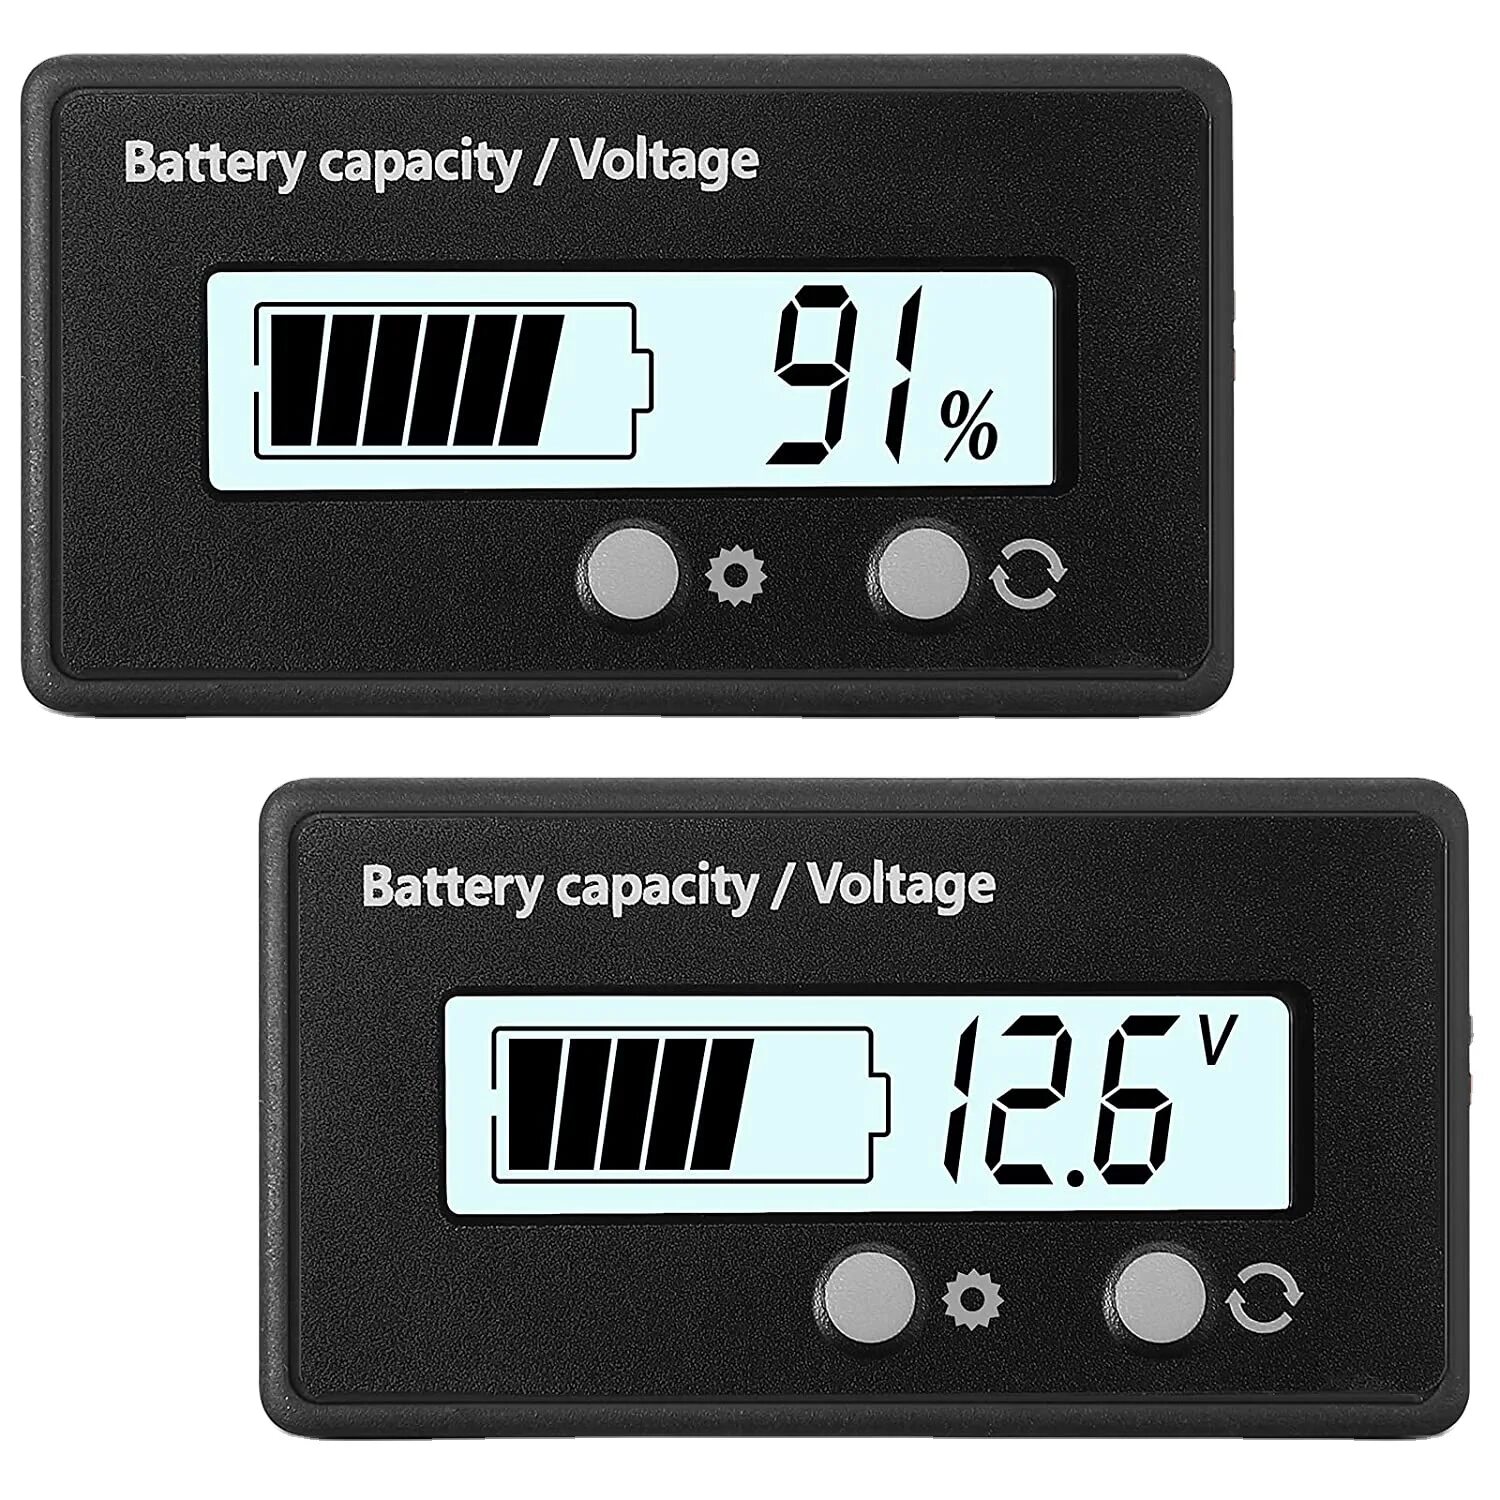 Battery capacity Voltage к БМС. Battery Meter. Battery capacity indicator как запрограммировать.